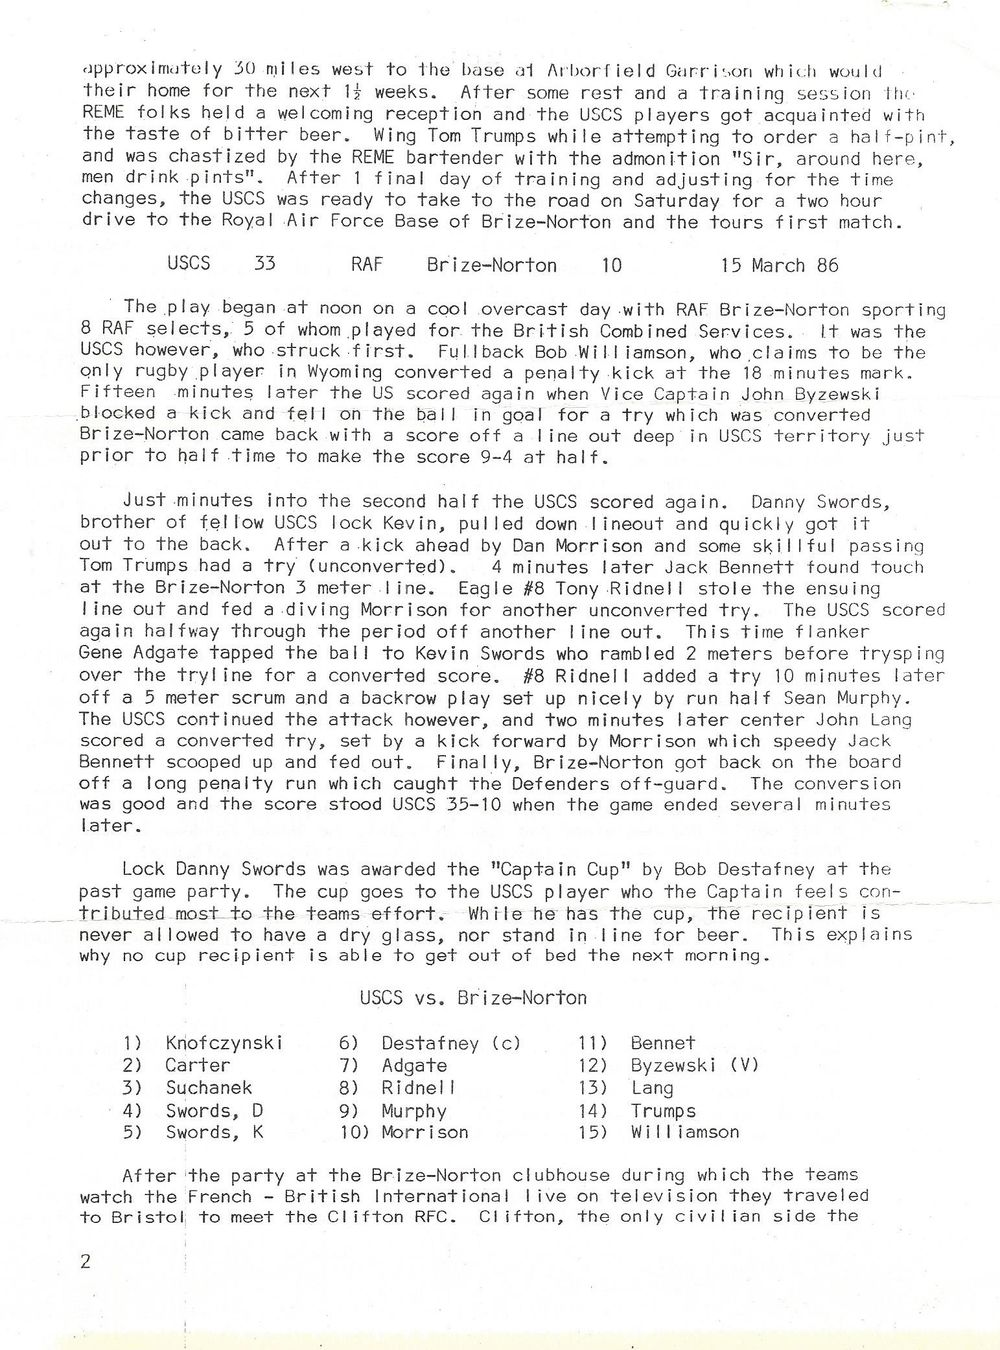 1986 CS tour report 2.jpg